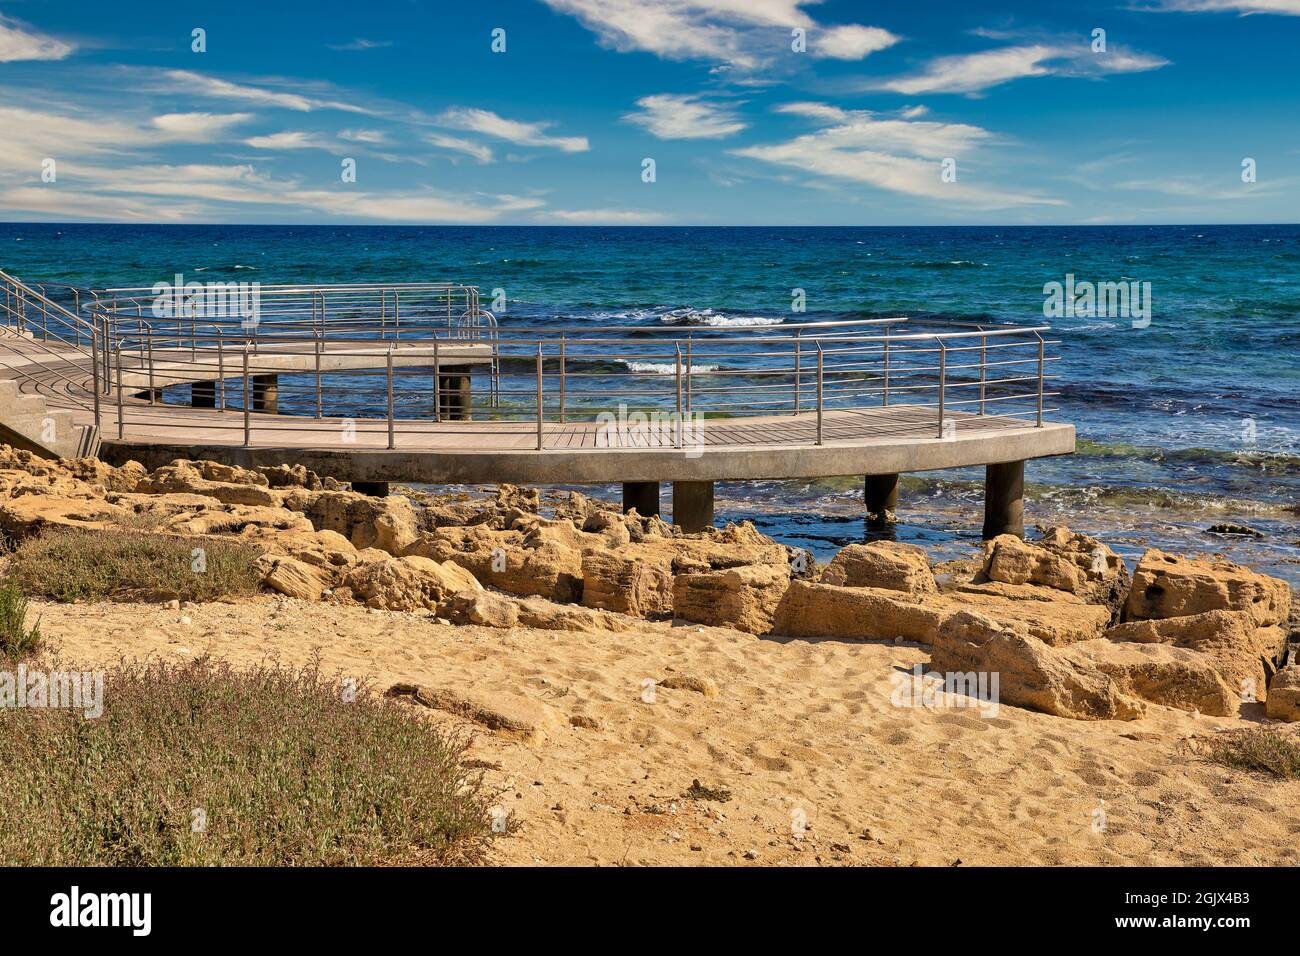 Ayia Napa summer resort beach promenade seafront, Cyprus. Stock Photo